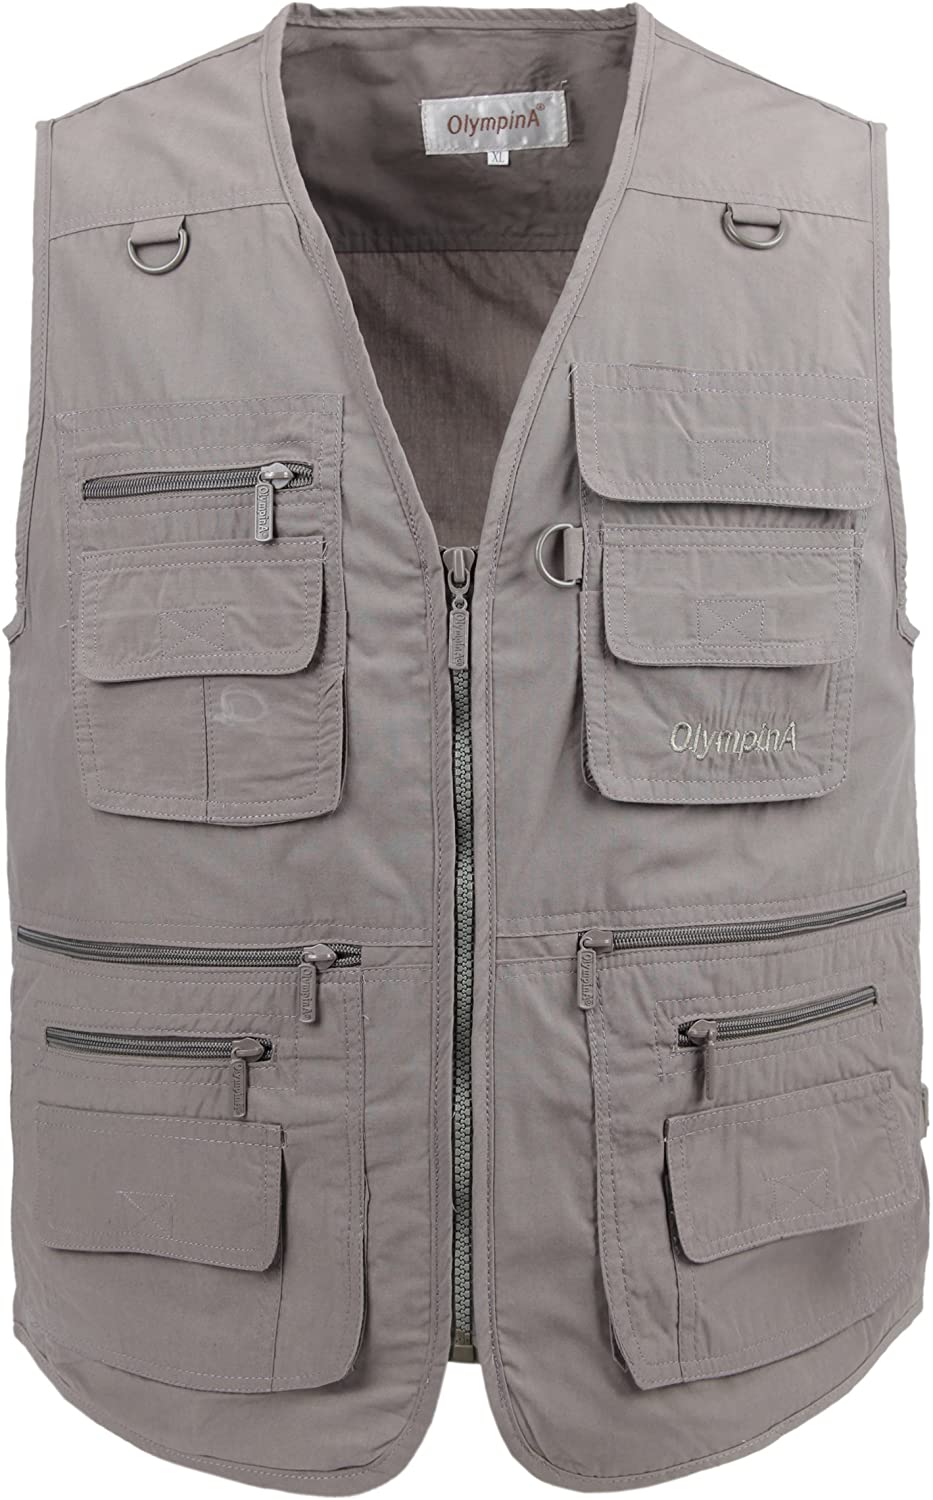 LUSI MADAM Men's Poplin Outdoors Travel Sports Multi-Pockets Work Fishing Vest